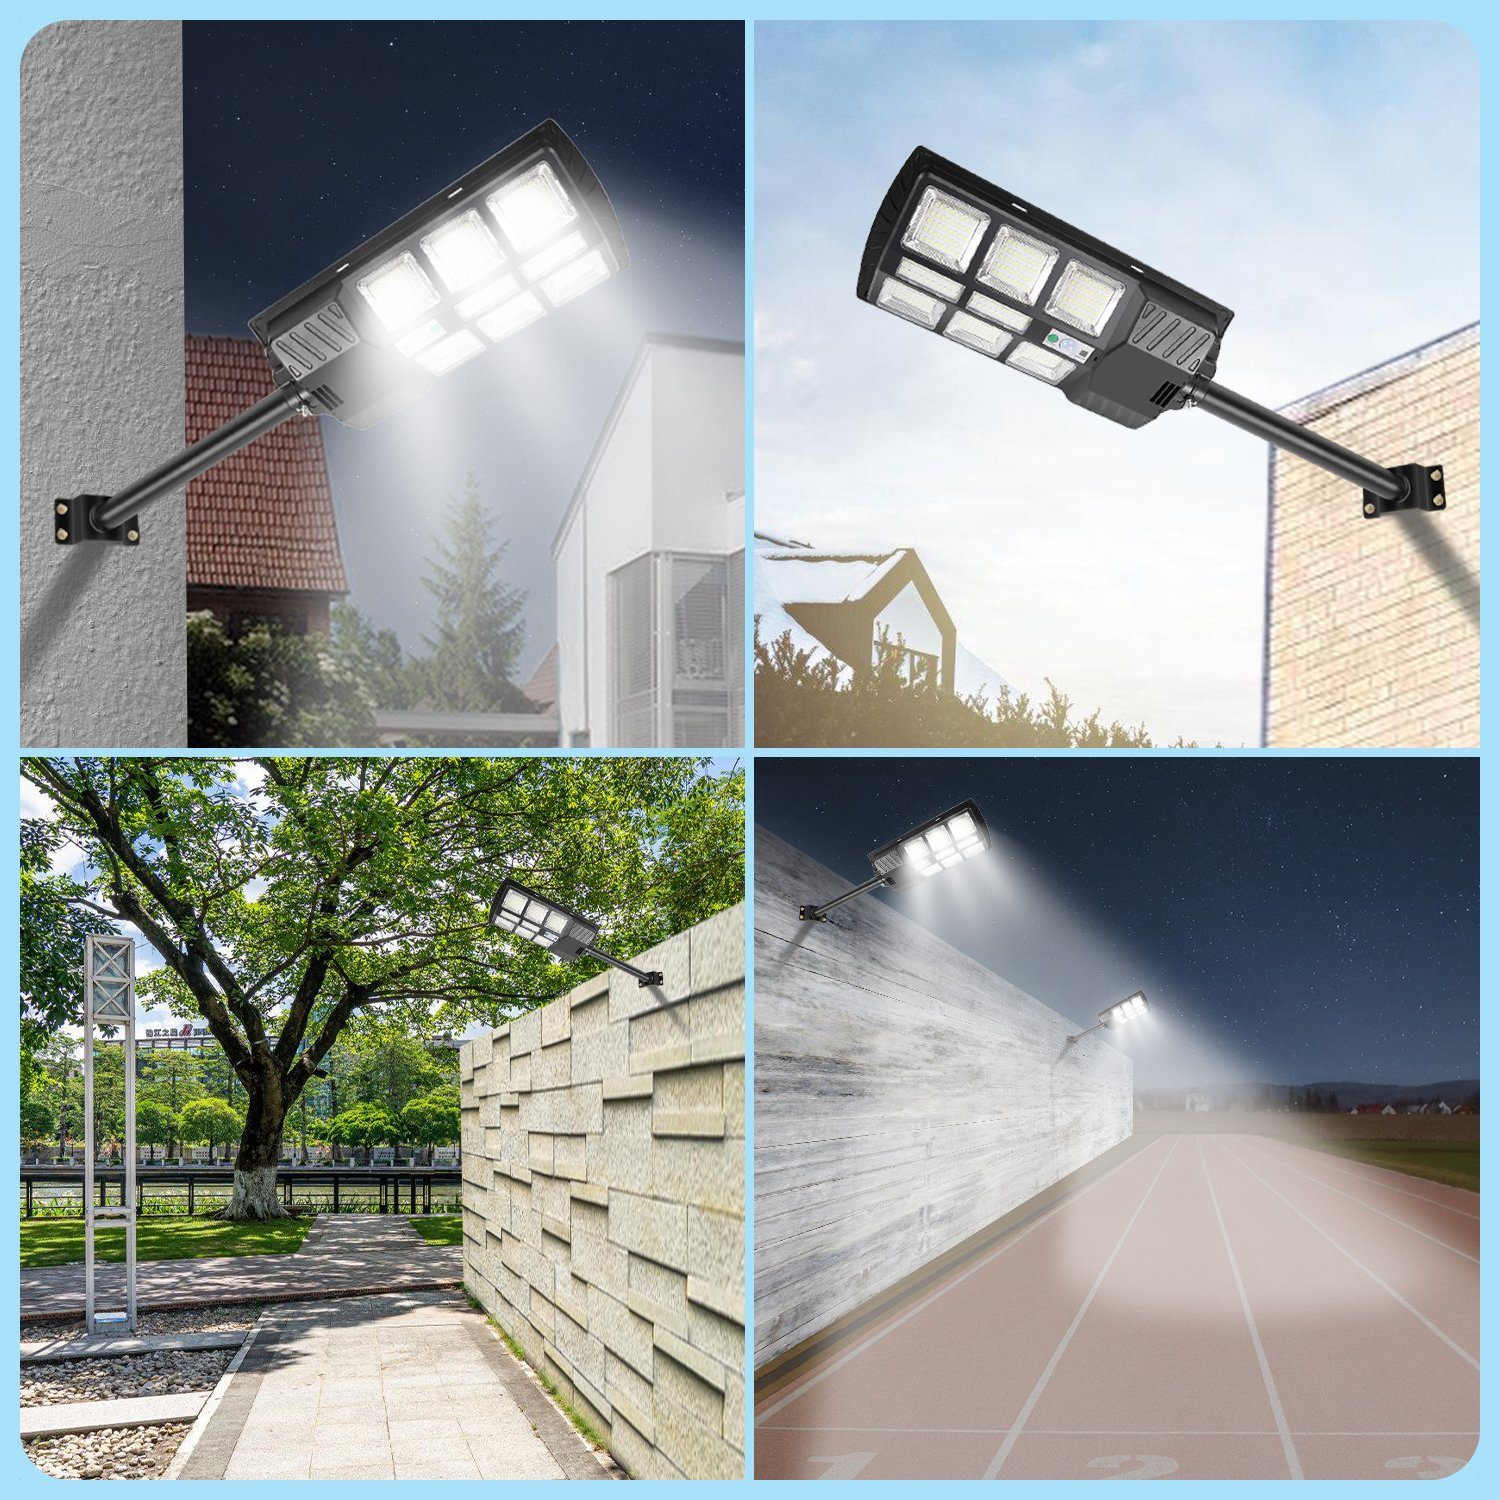 Gimisgu LED Solarleuchte Straßenlaterne mit LED Solar Straßenlampe Bewegungsmelder Strahler